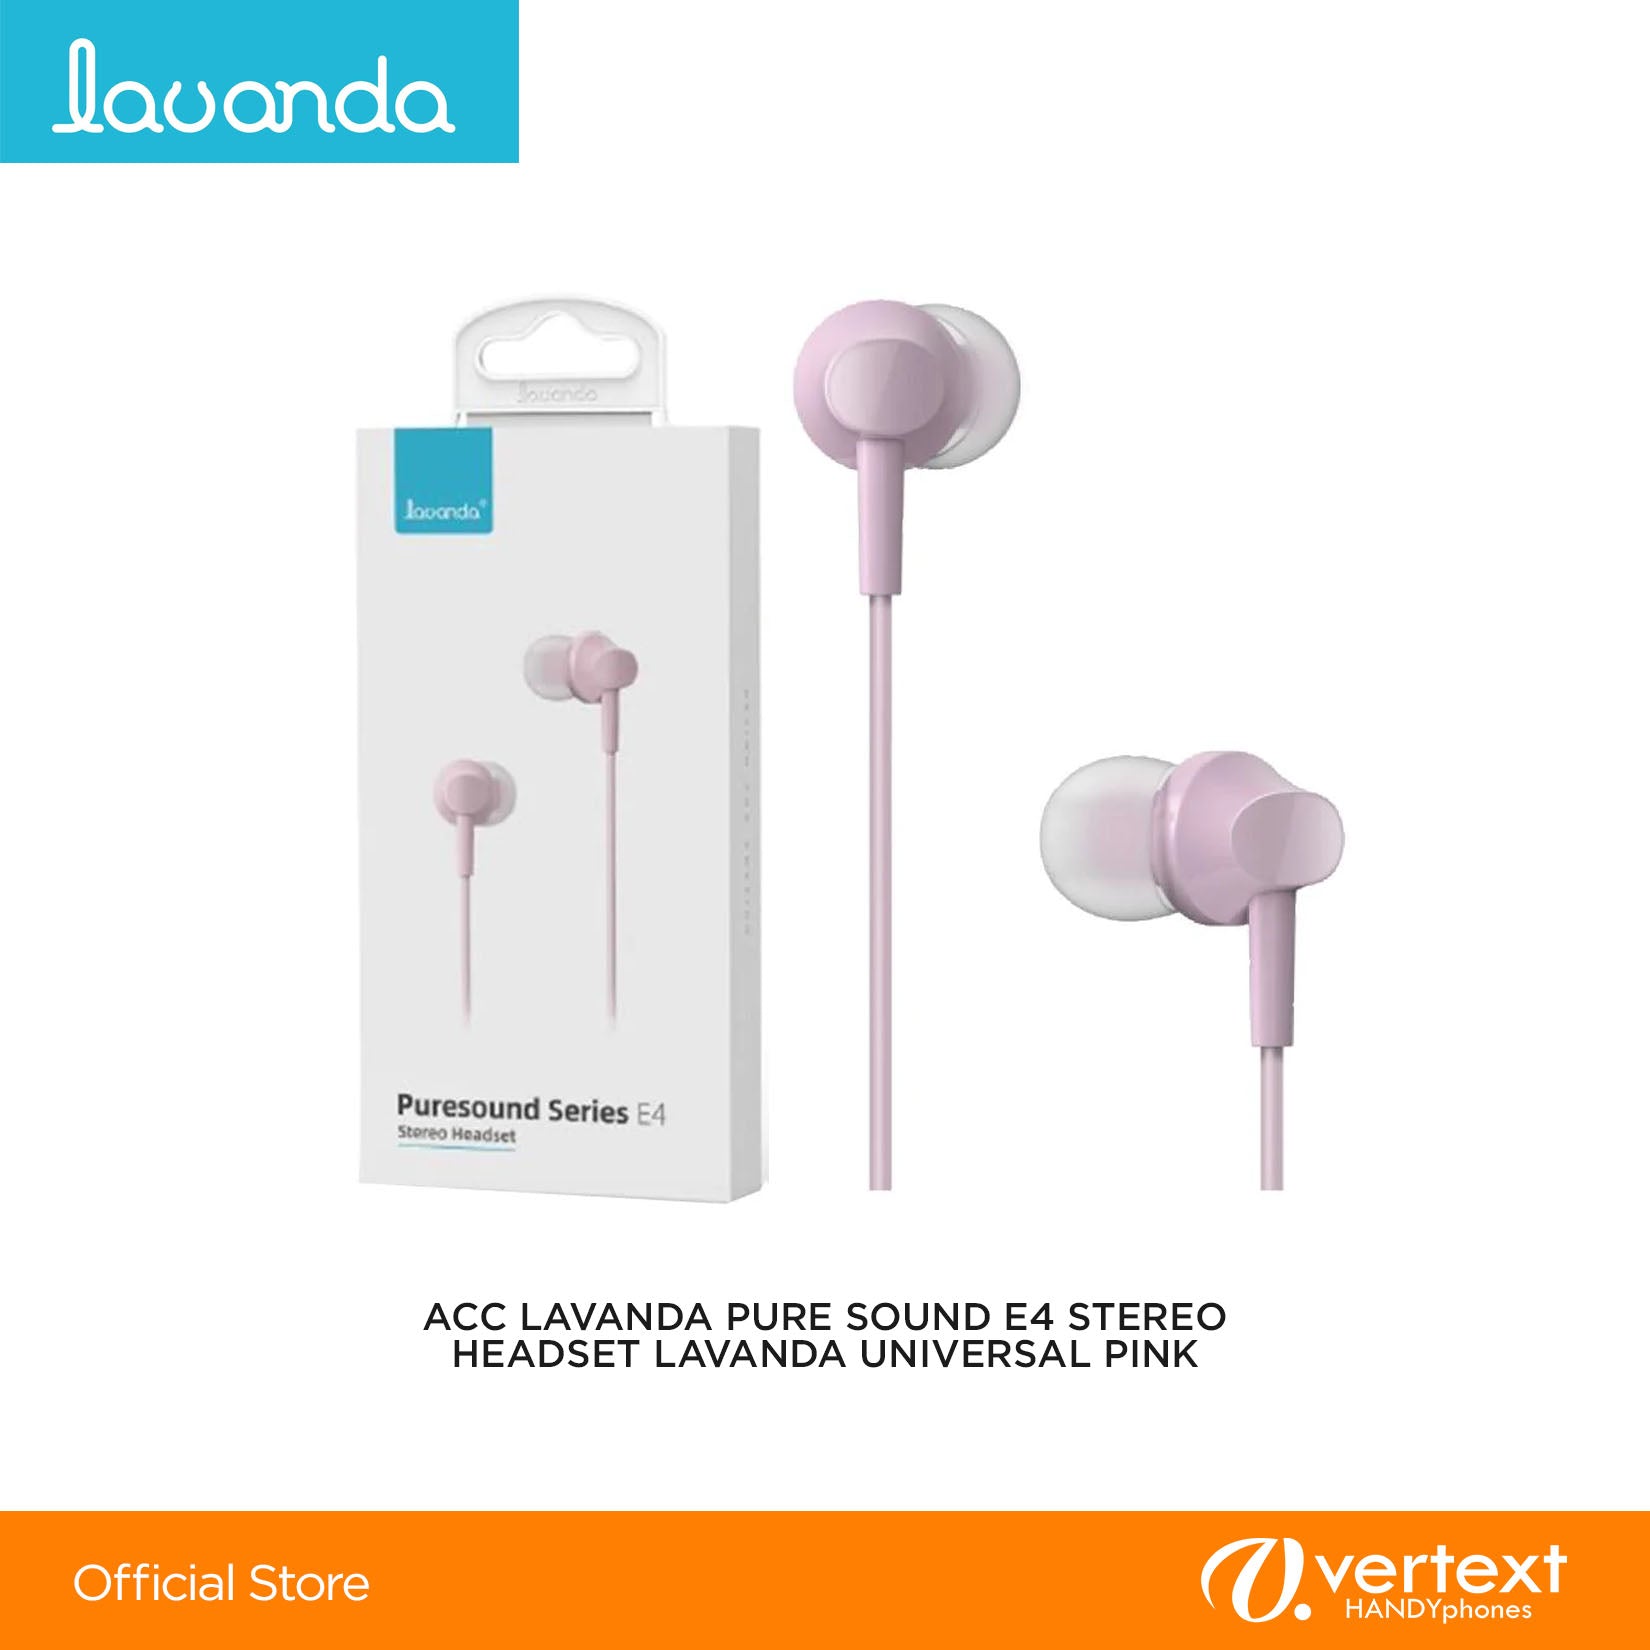 Lavanda Pure Sound E4 Stereo Headset Lavanda Universal Pink